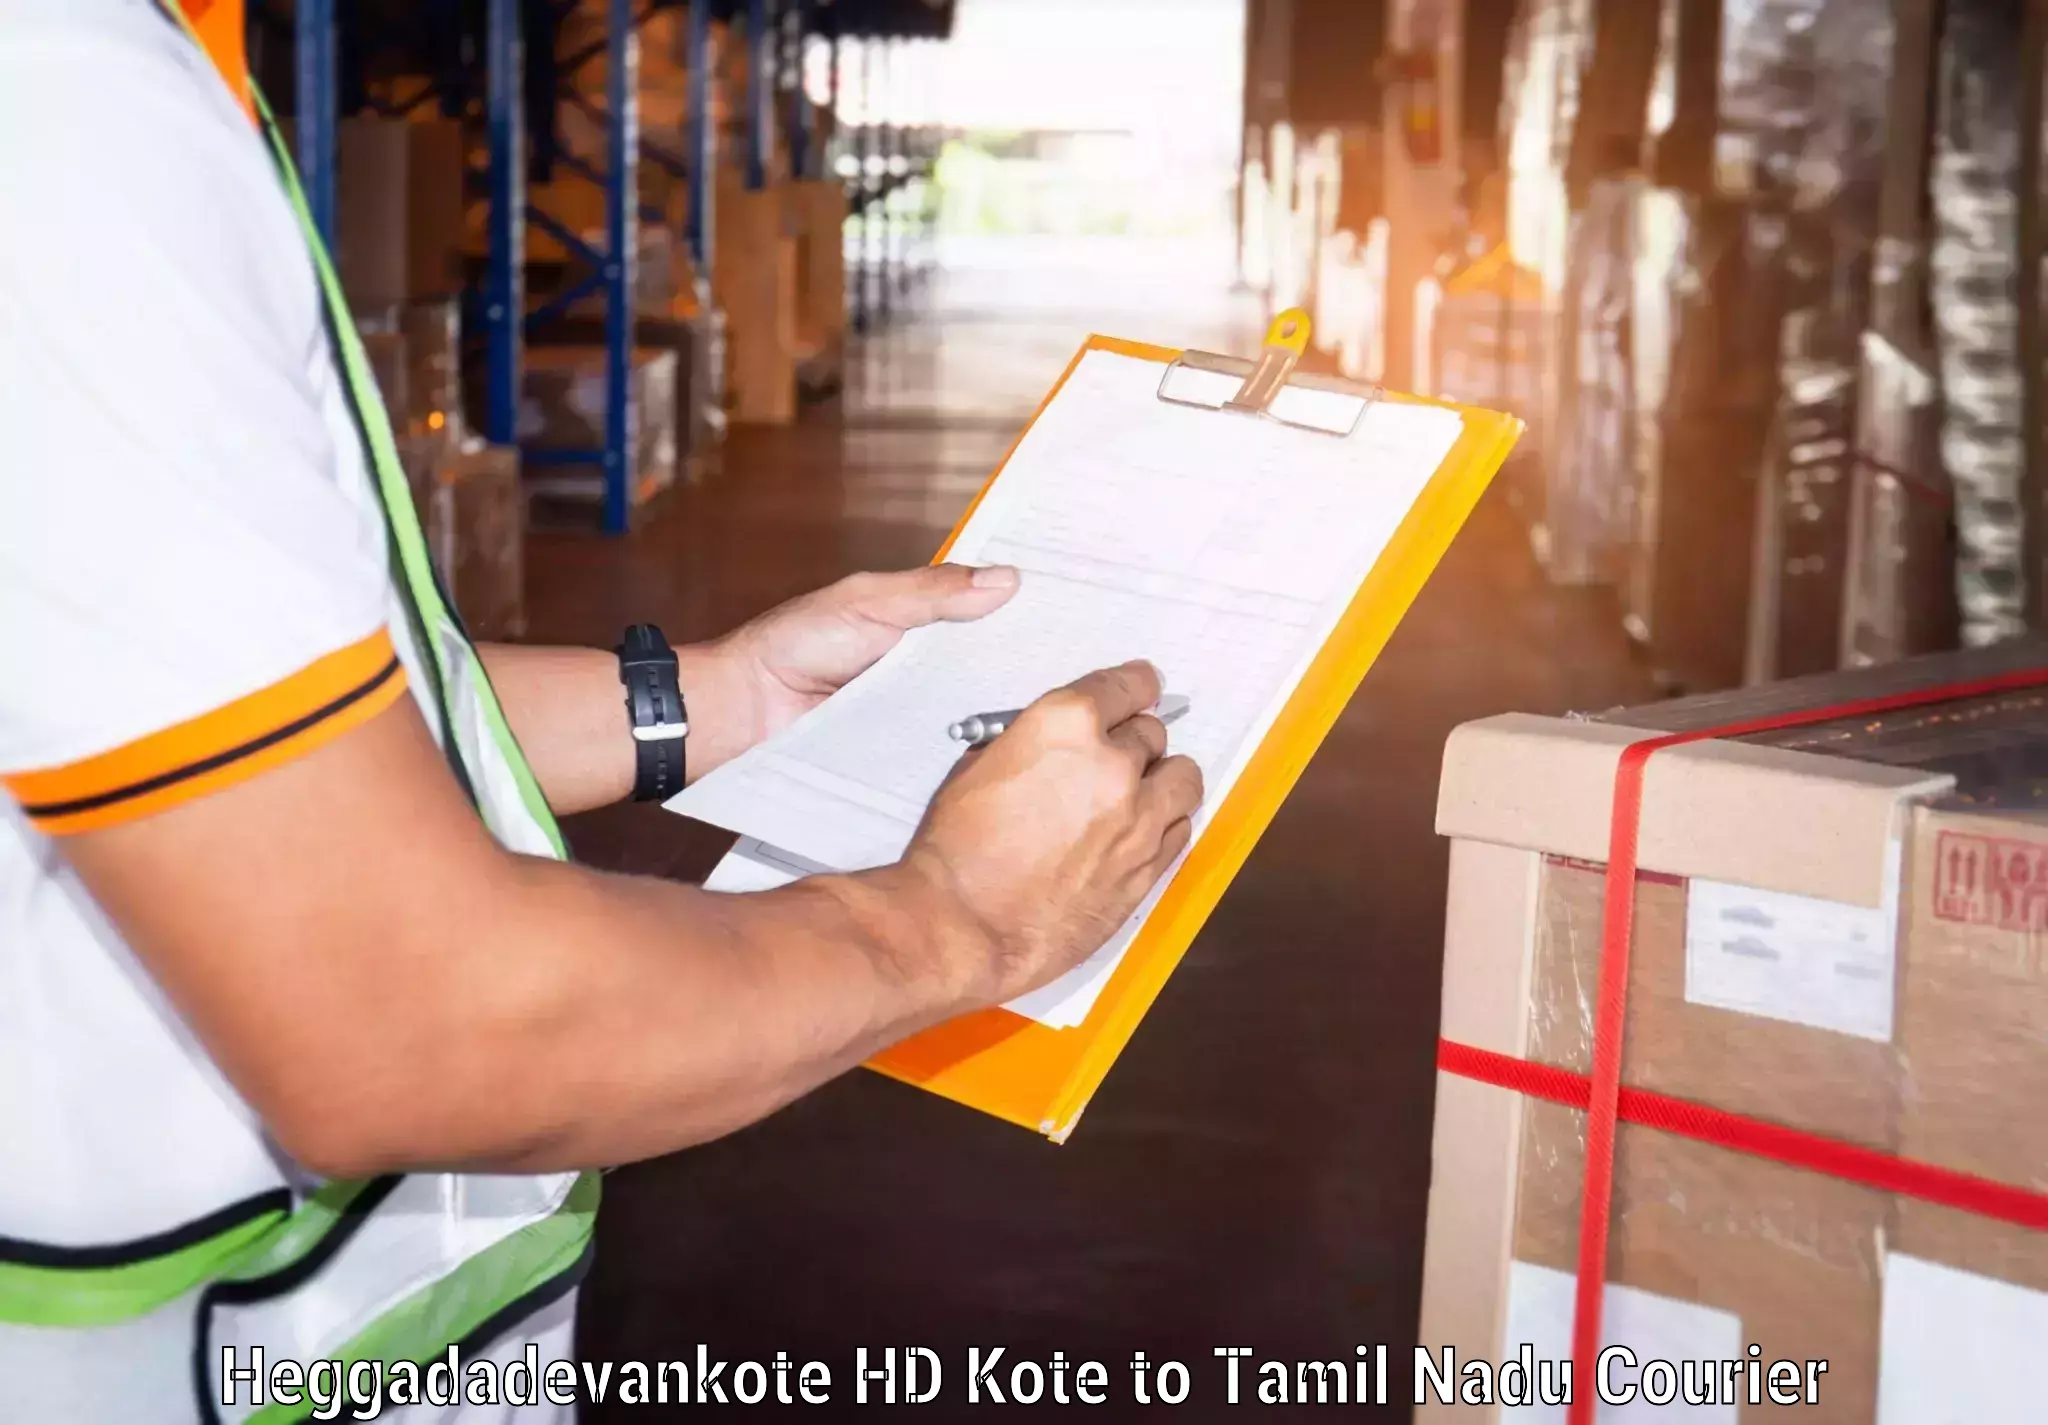 Fastest parcel delivery Heggadadevankote HD Kote to Perundurai